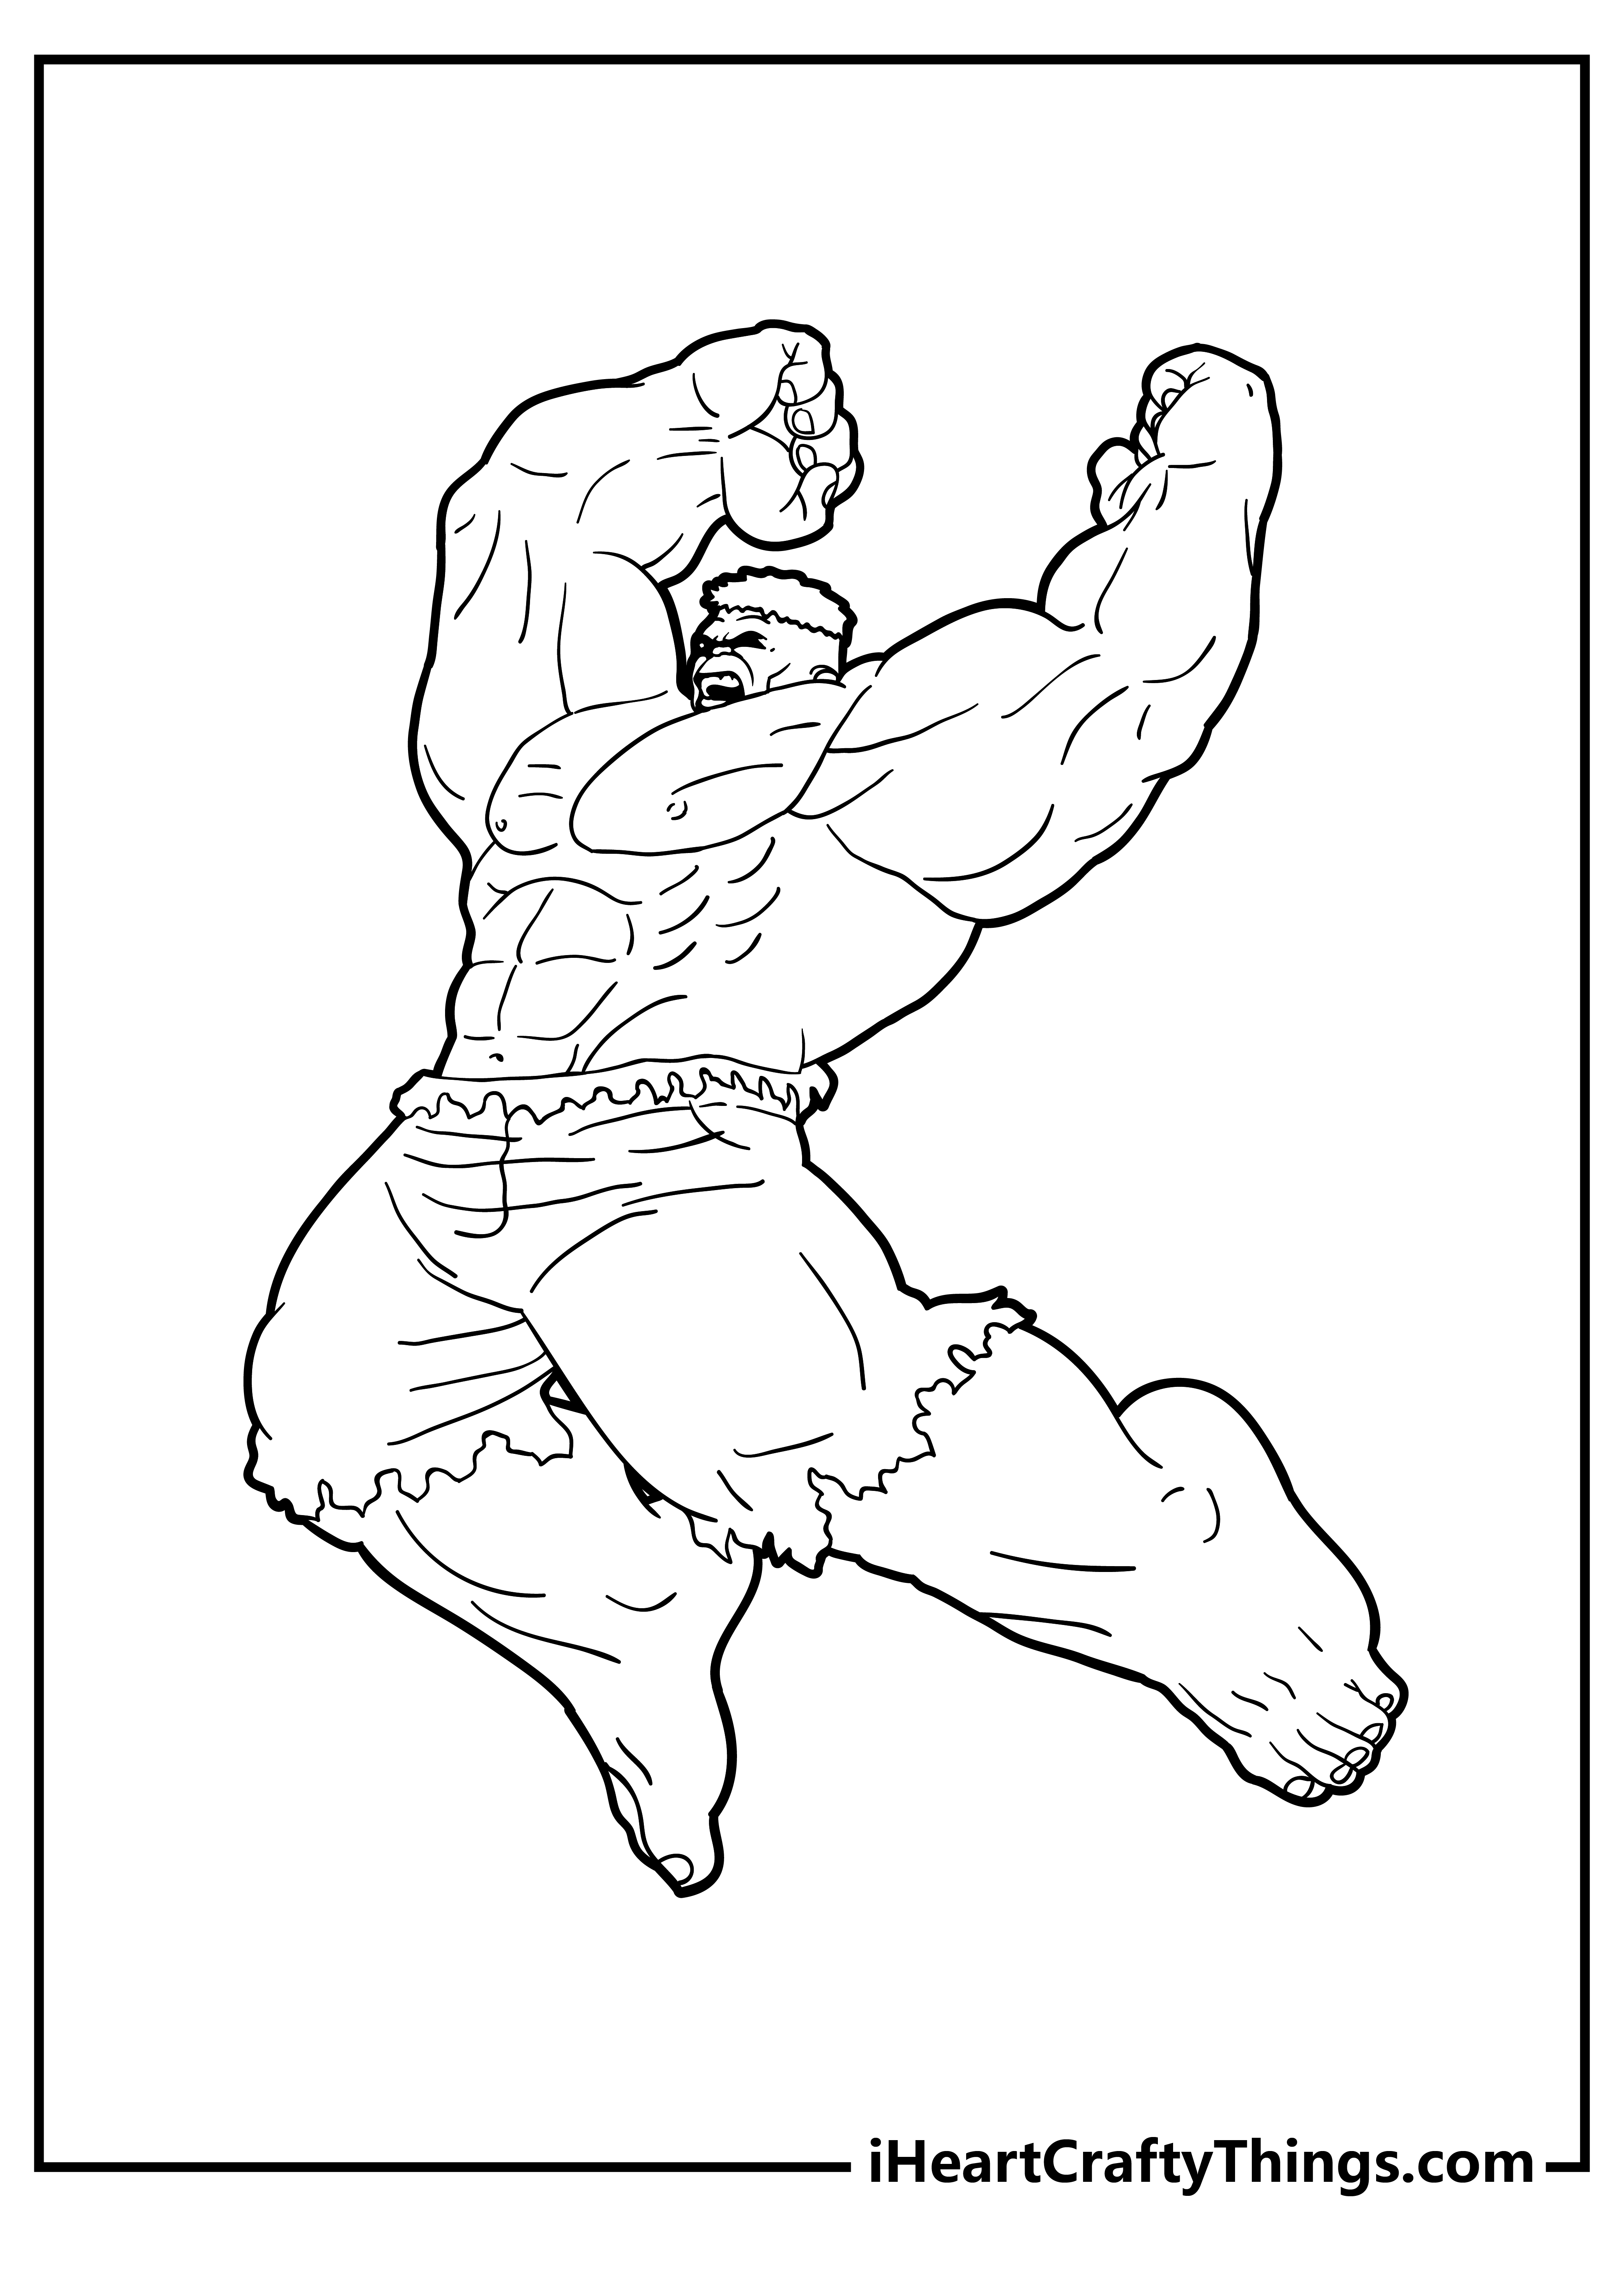 Hulk Coloring Original Sheet for children free download